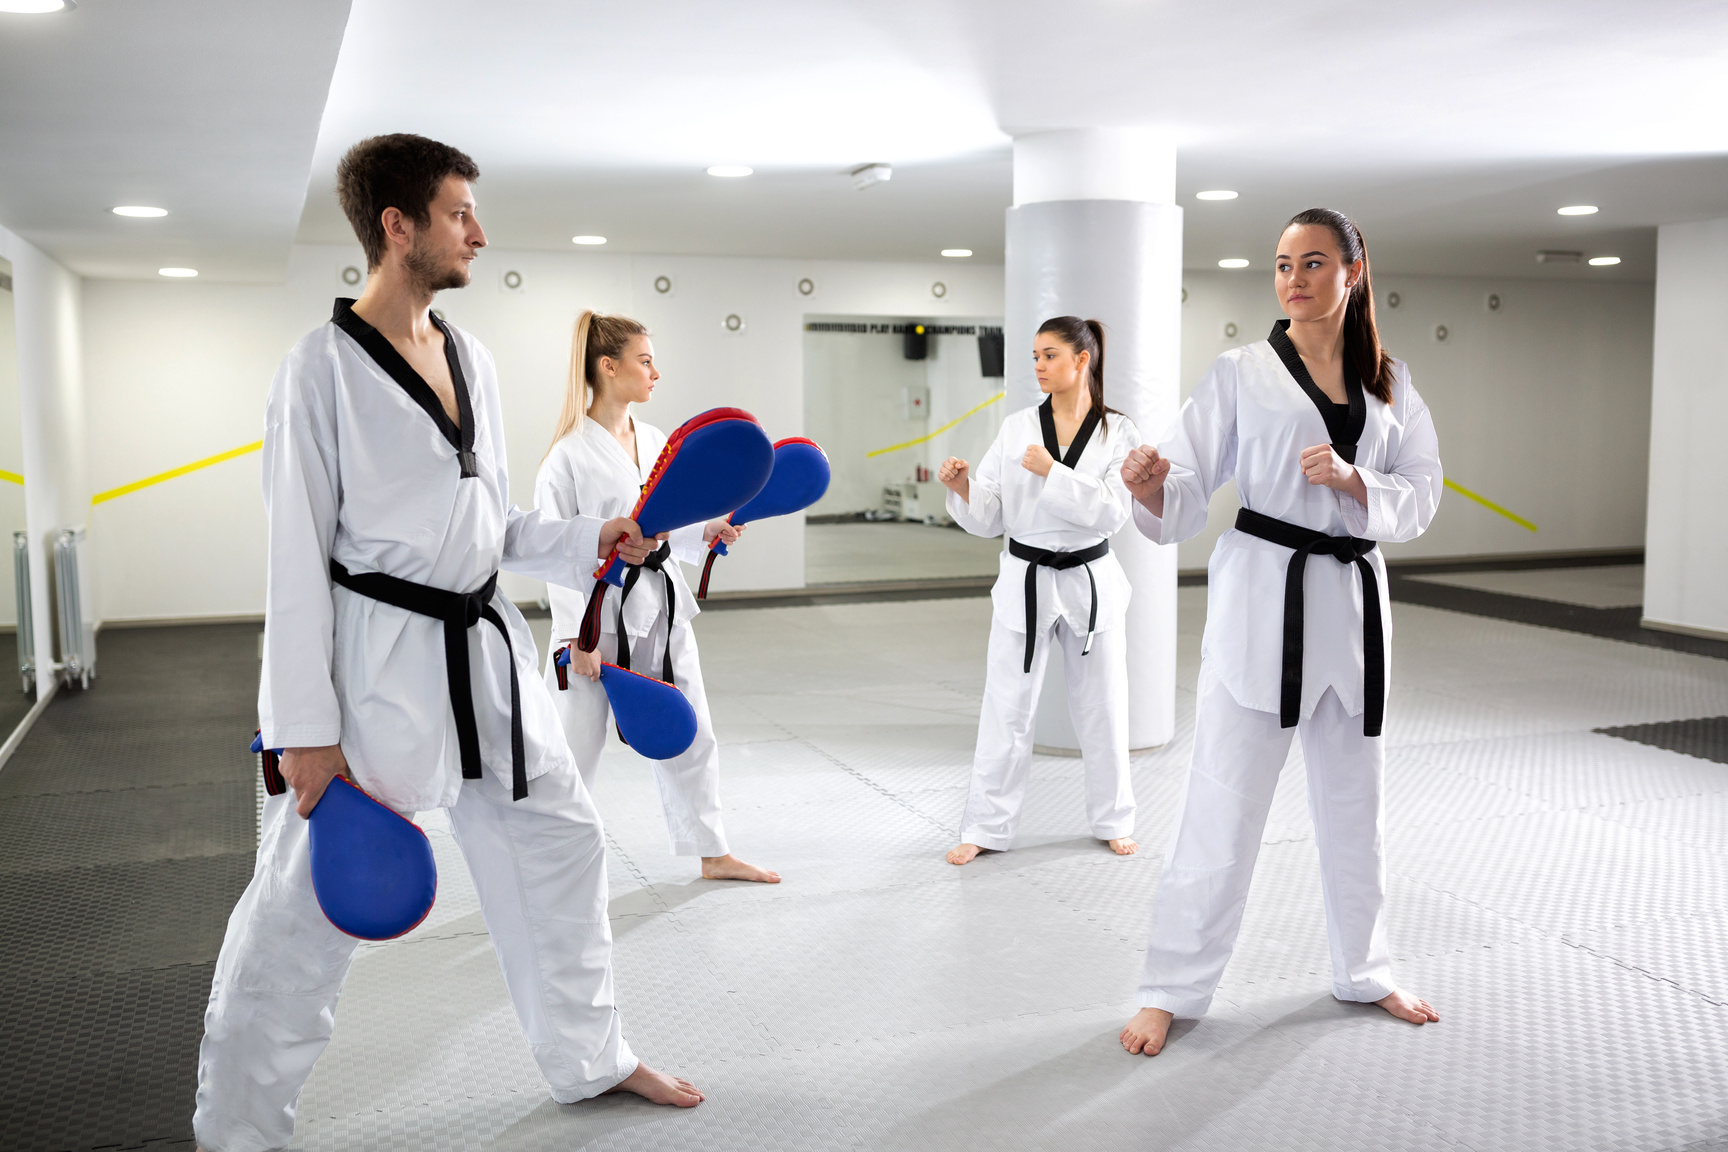 Taekwondo training with kick pad targets